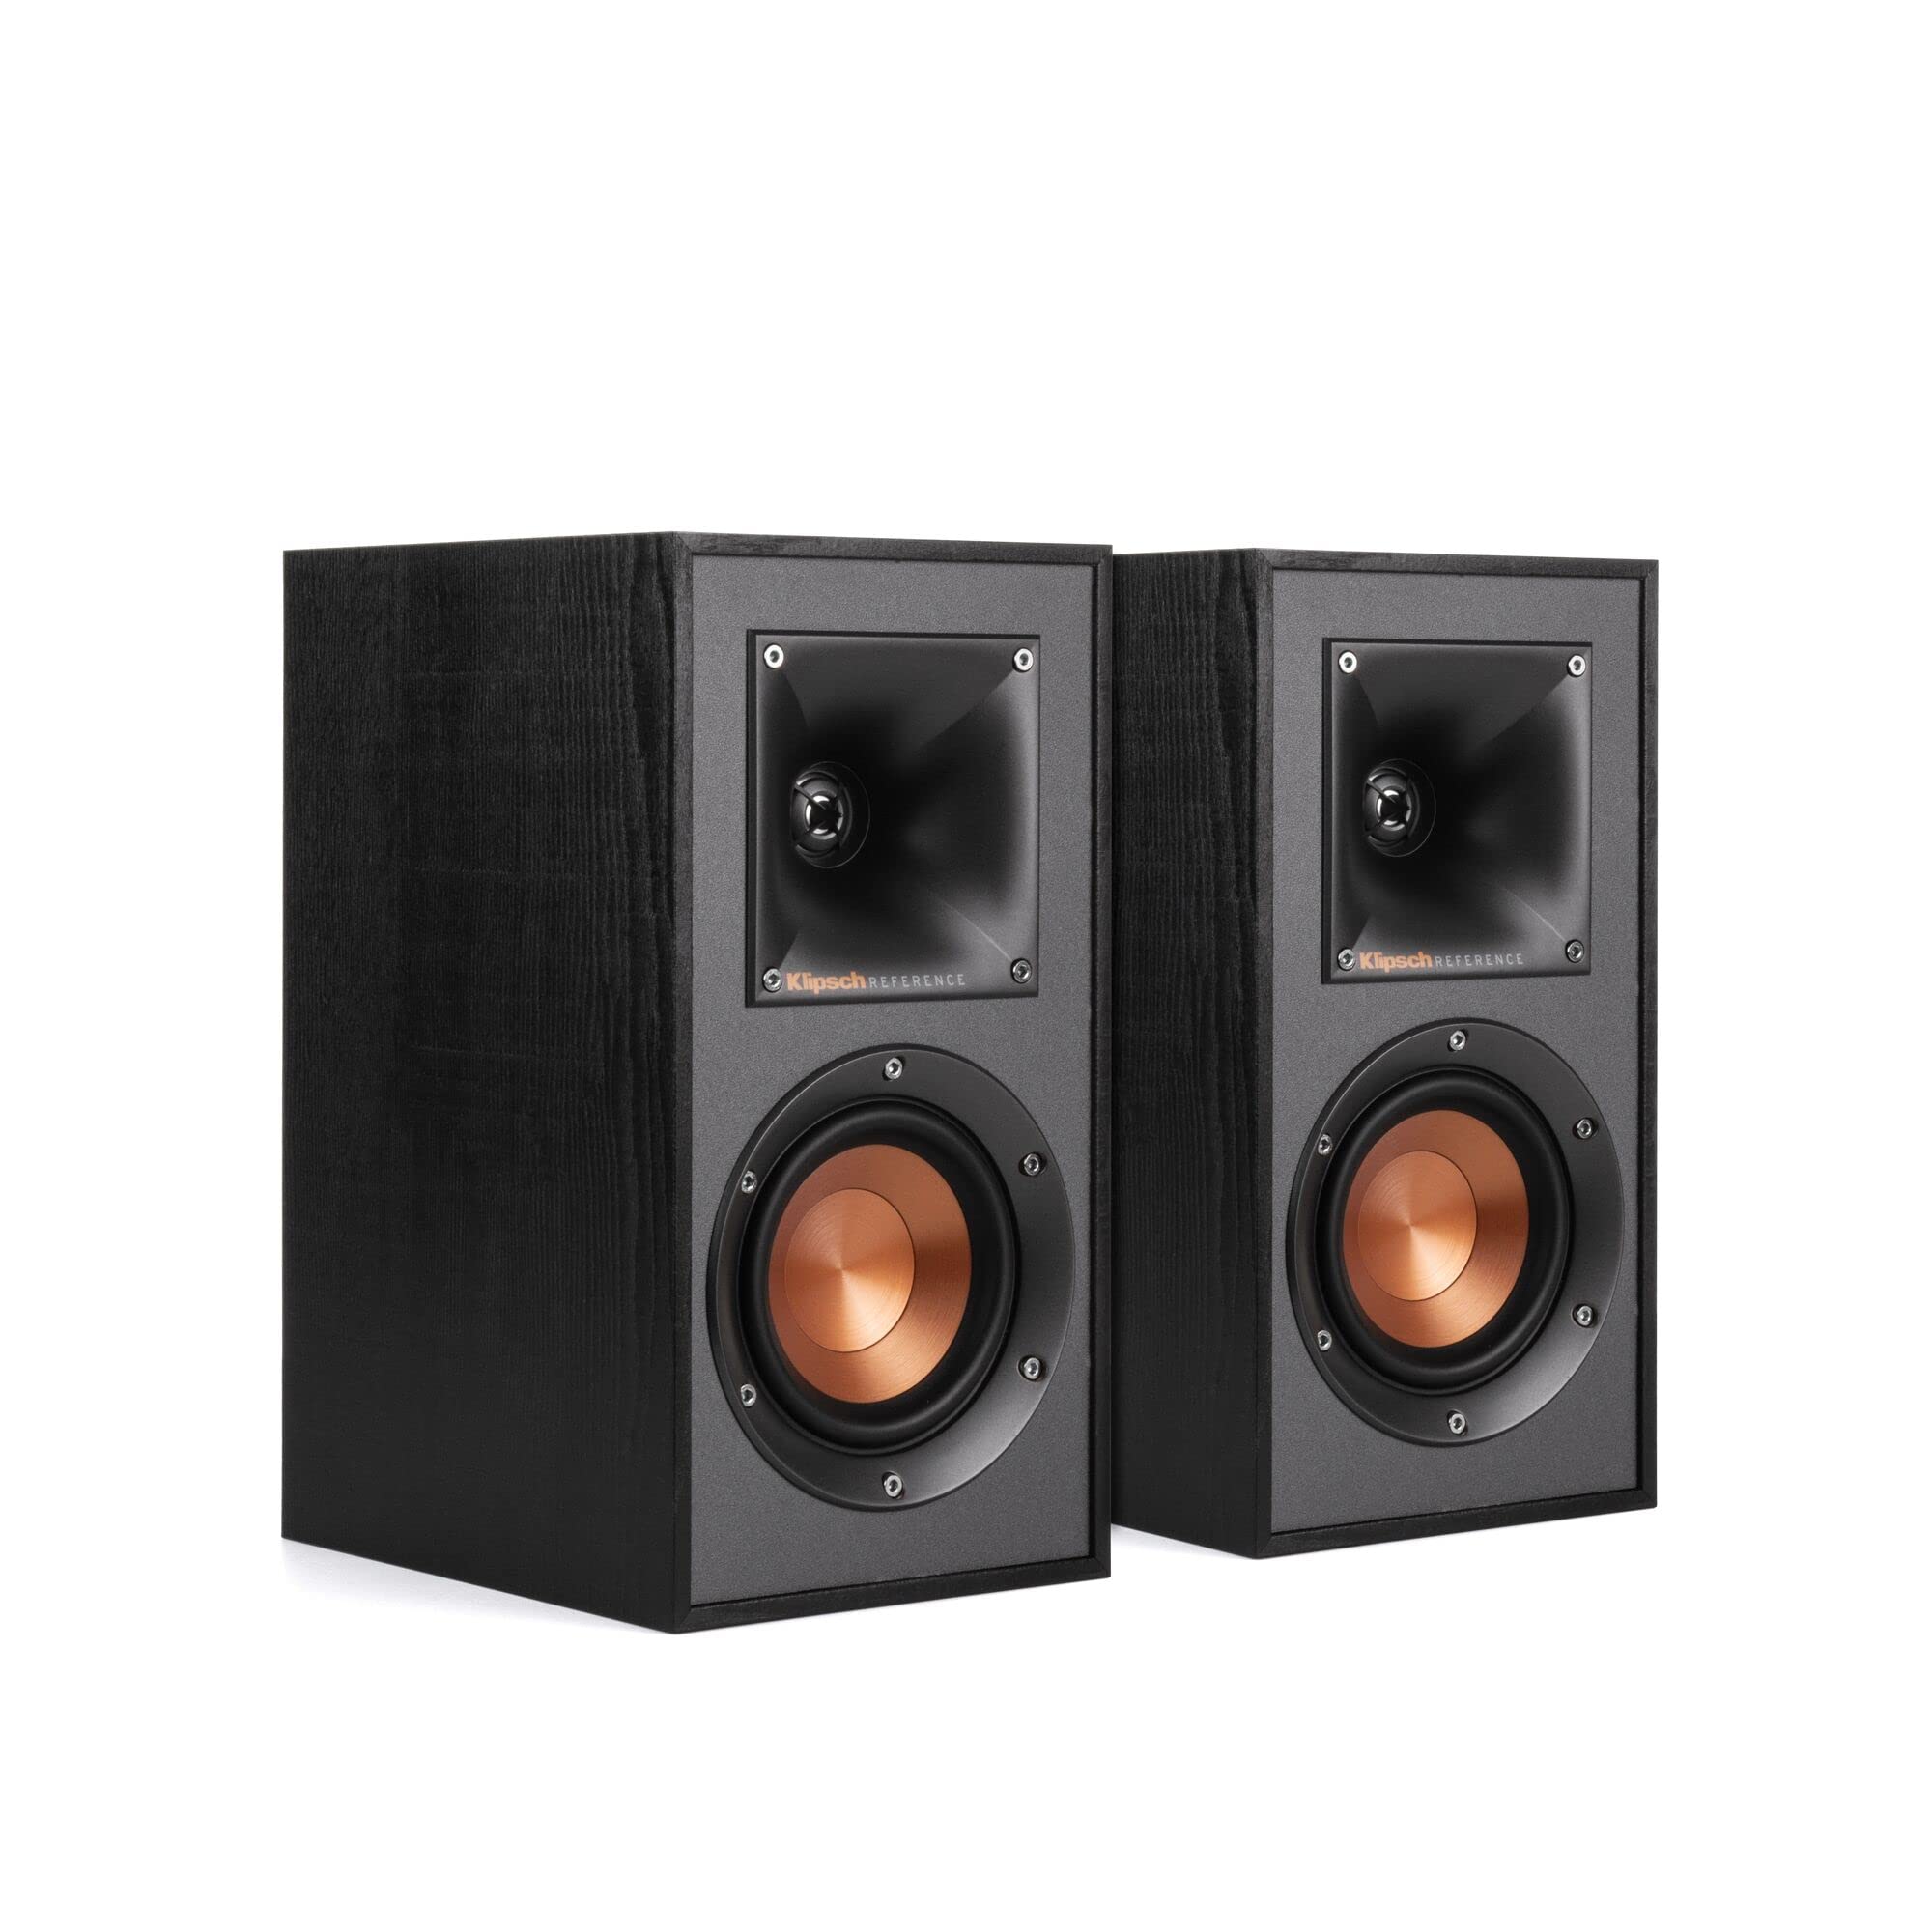 Deals-Klipsch R-41M Powerful Detailed Bookshelf Home Speaker Set of 2 Black $119.98